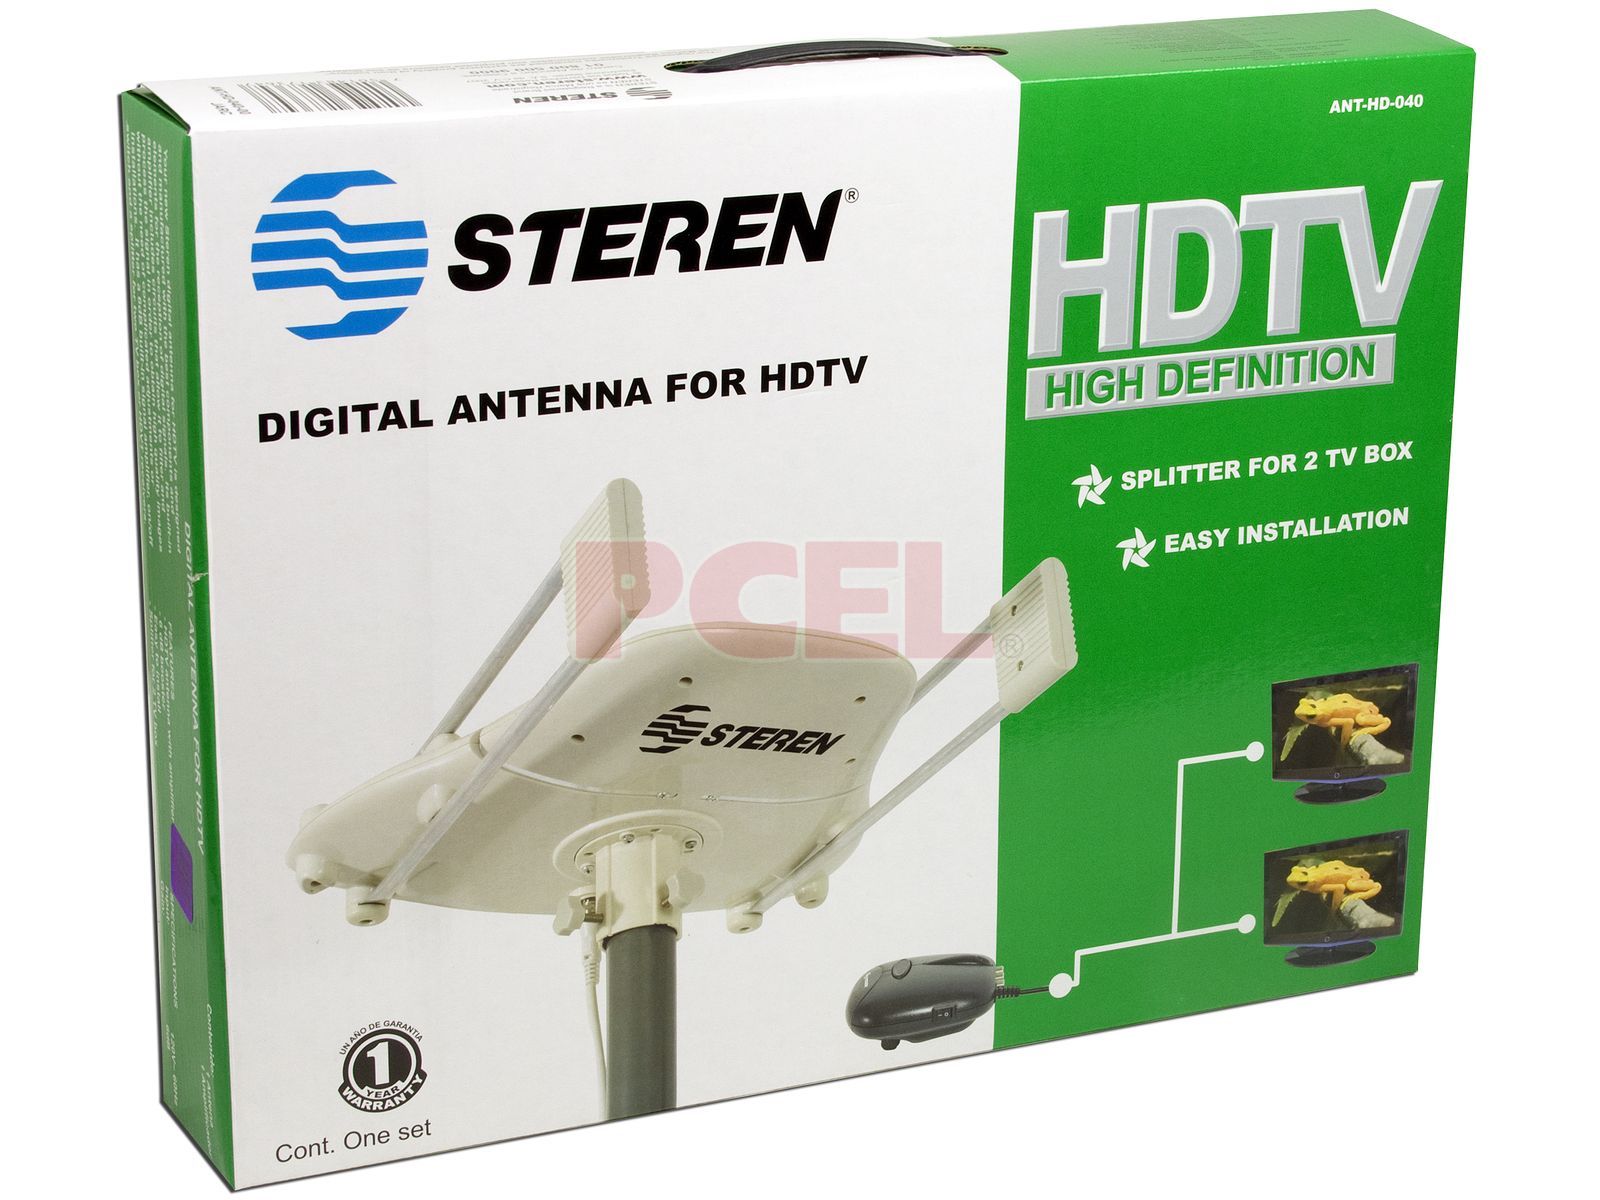 Antena Aérea Tdt Hd Steren Xtreme De Alta Definición Para Dvb-T2